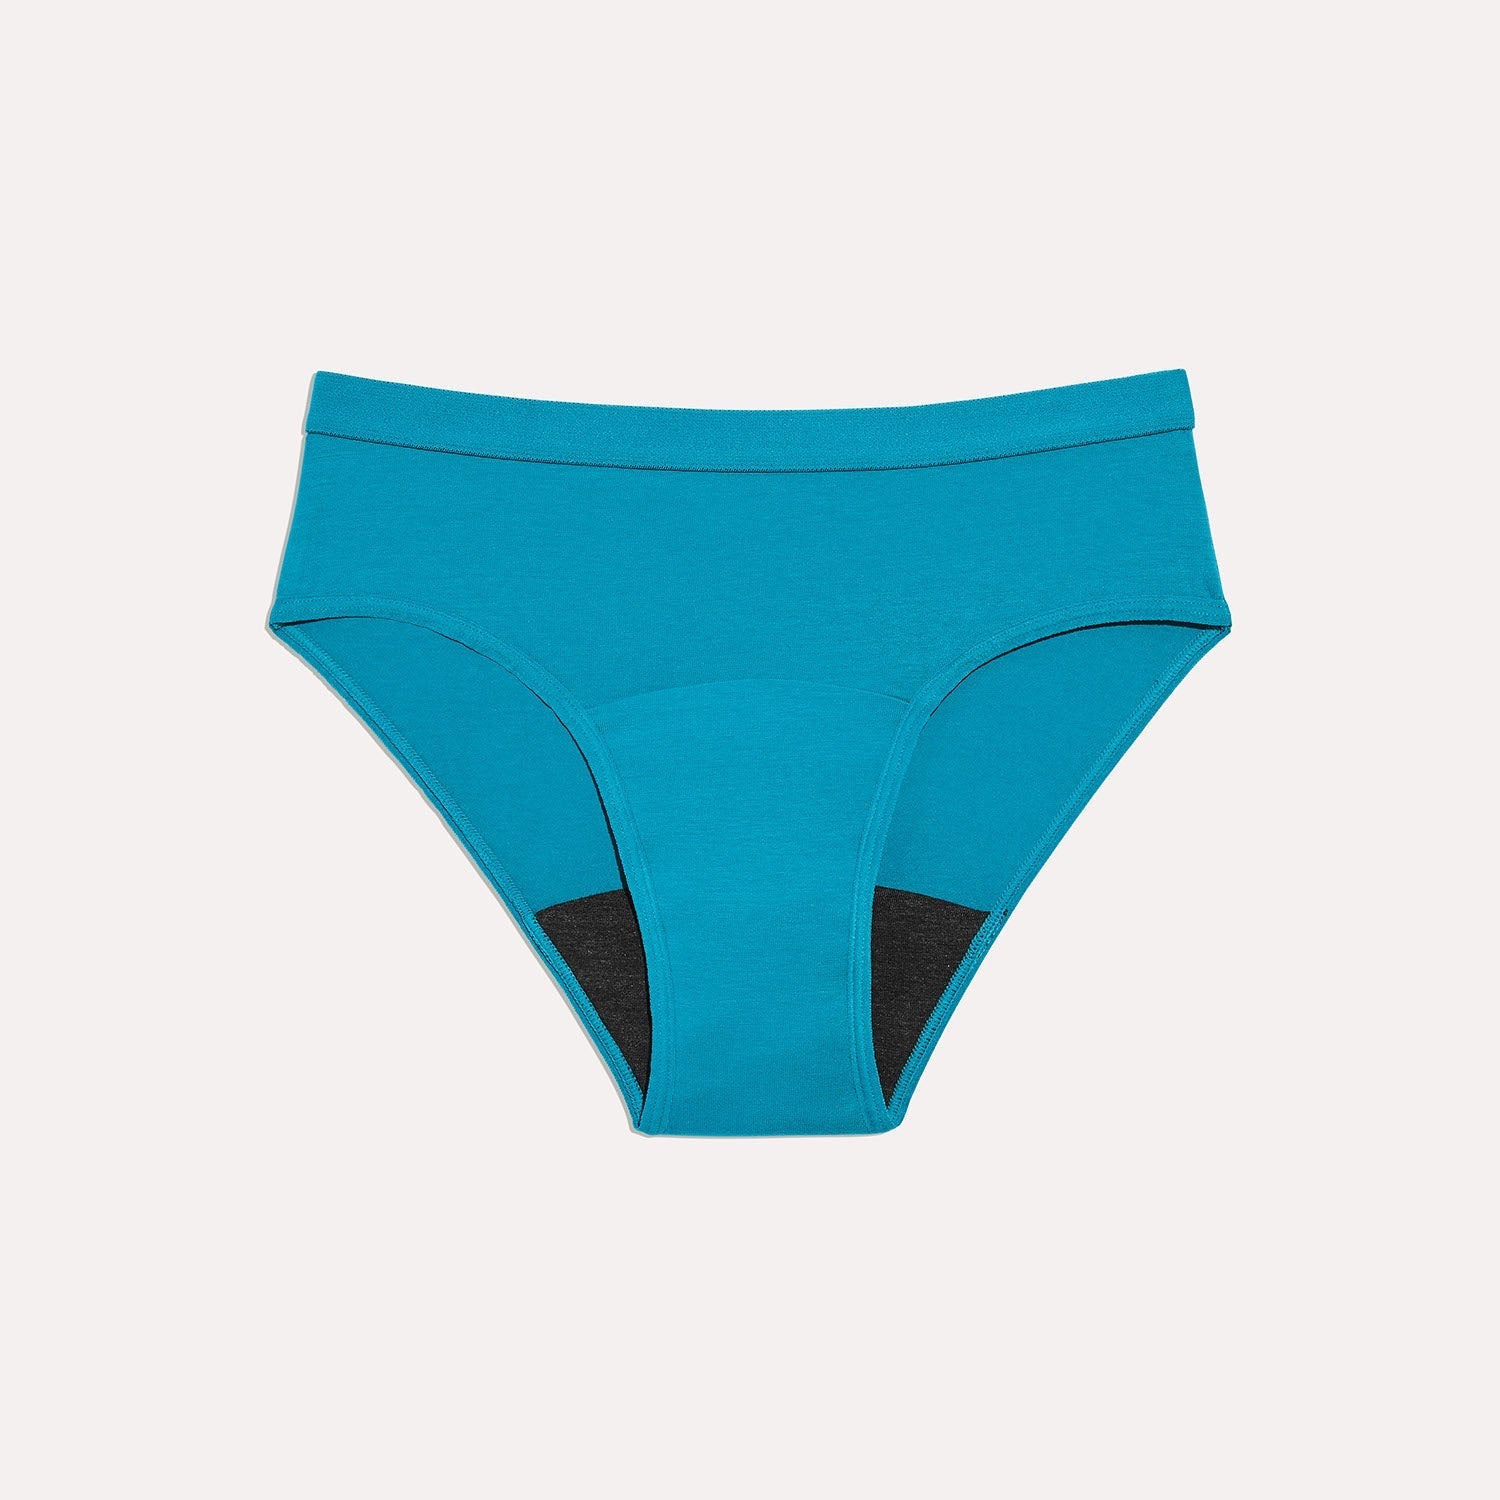 Buy Kryptic Women Teal Green & Teal Blue & Boys Blue Solid Cotton Bikini  Briefs (Pack of 3) Online